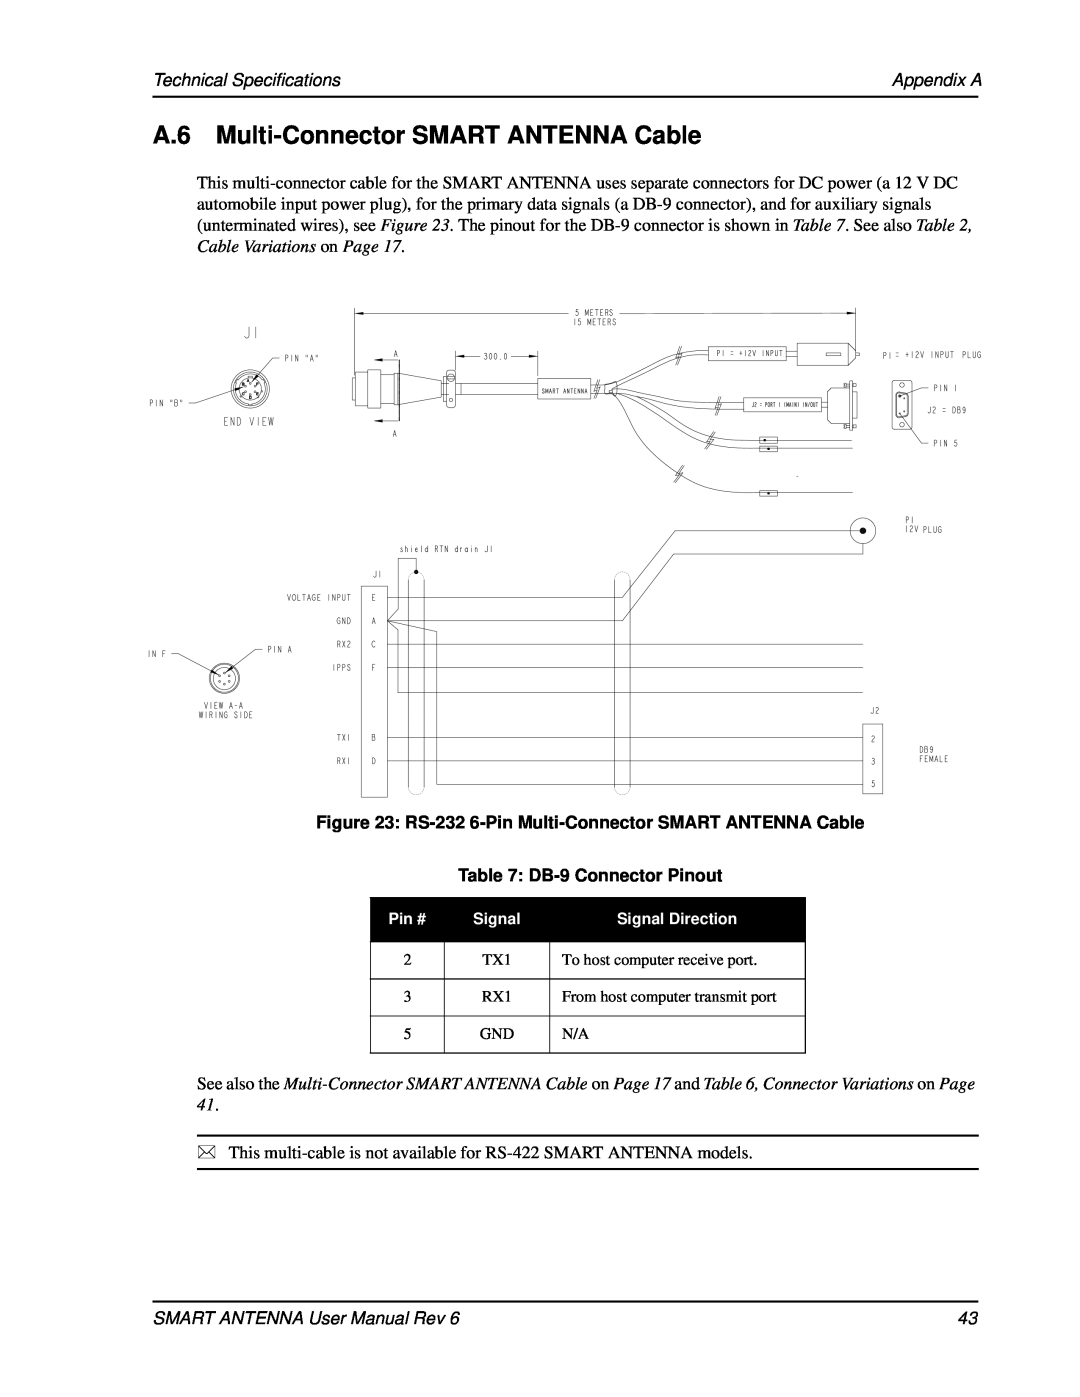 Novatel user manual A.6 Multi-ConnectorSMART ANTENNA Cable, Technical Specifications, Appendix A, DB-9Connector Pinout 